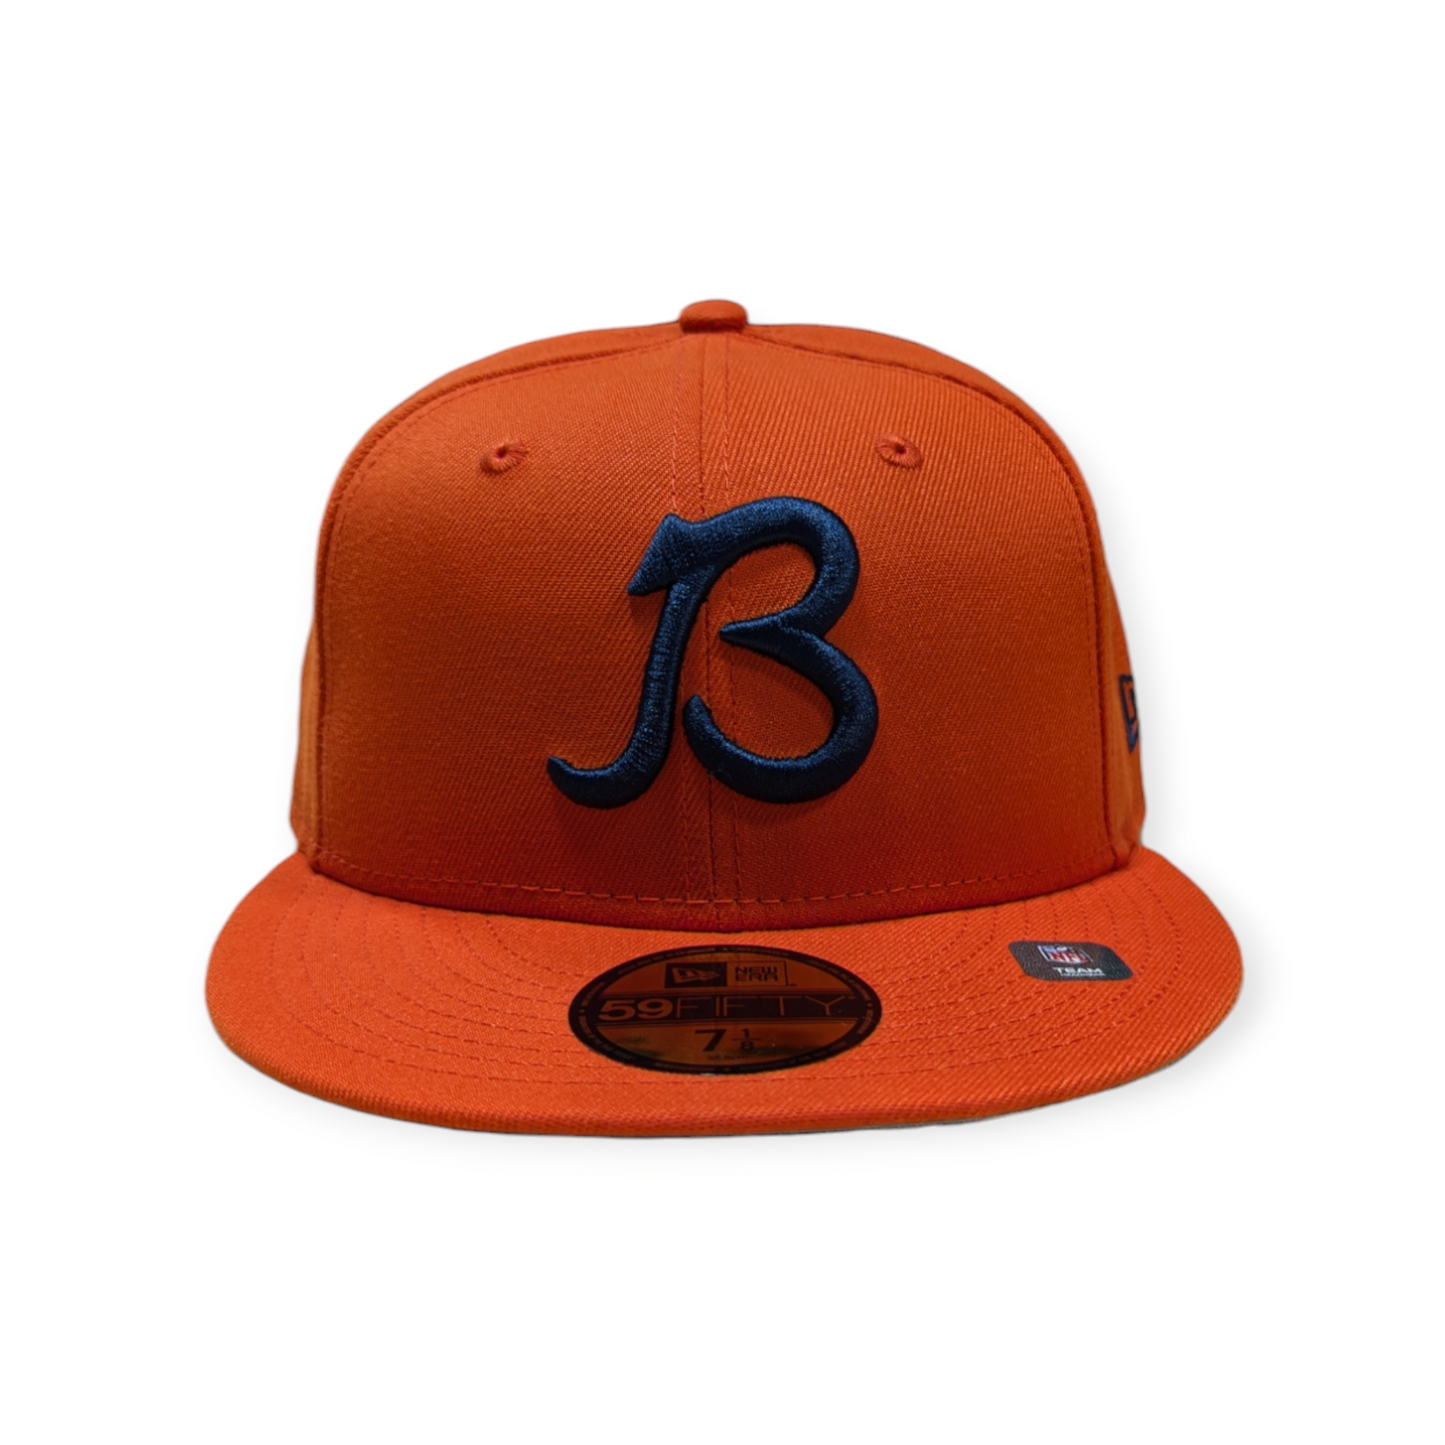 Chicago Bears "B" Logo Orange New Era 59FIFTY Fitted Hat